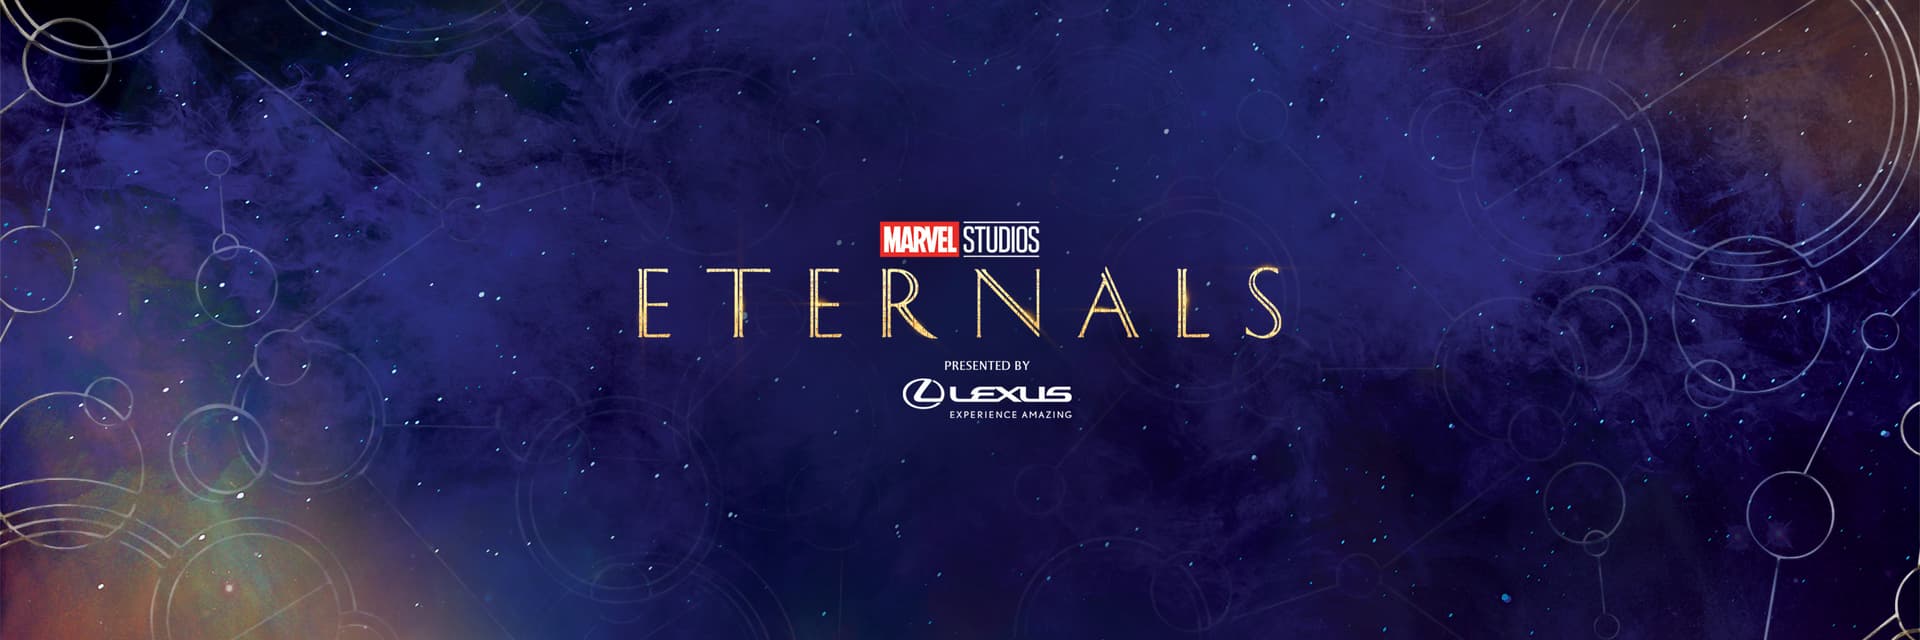 Marvel Studios' Eternals Live Red Carpet Premiere